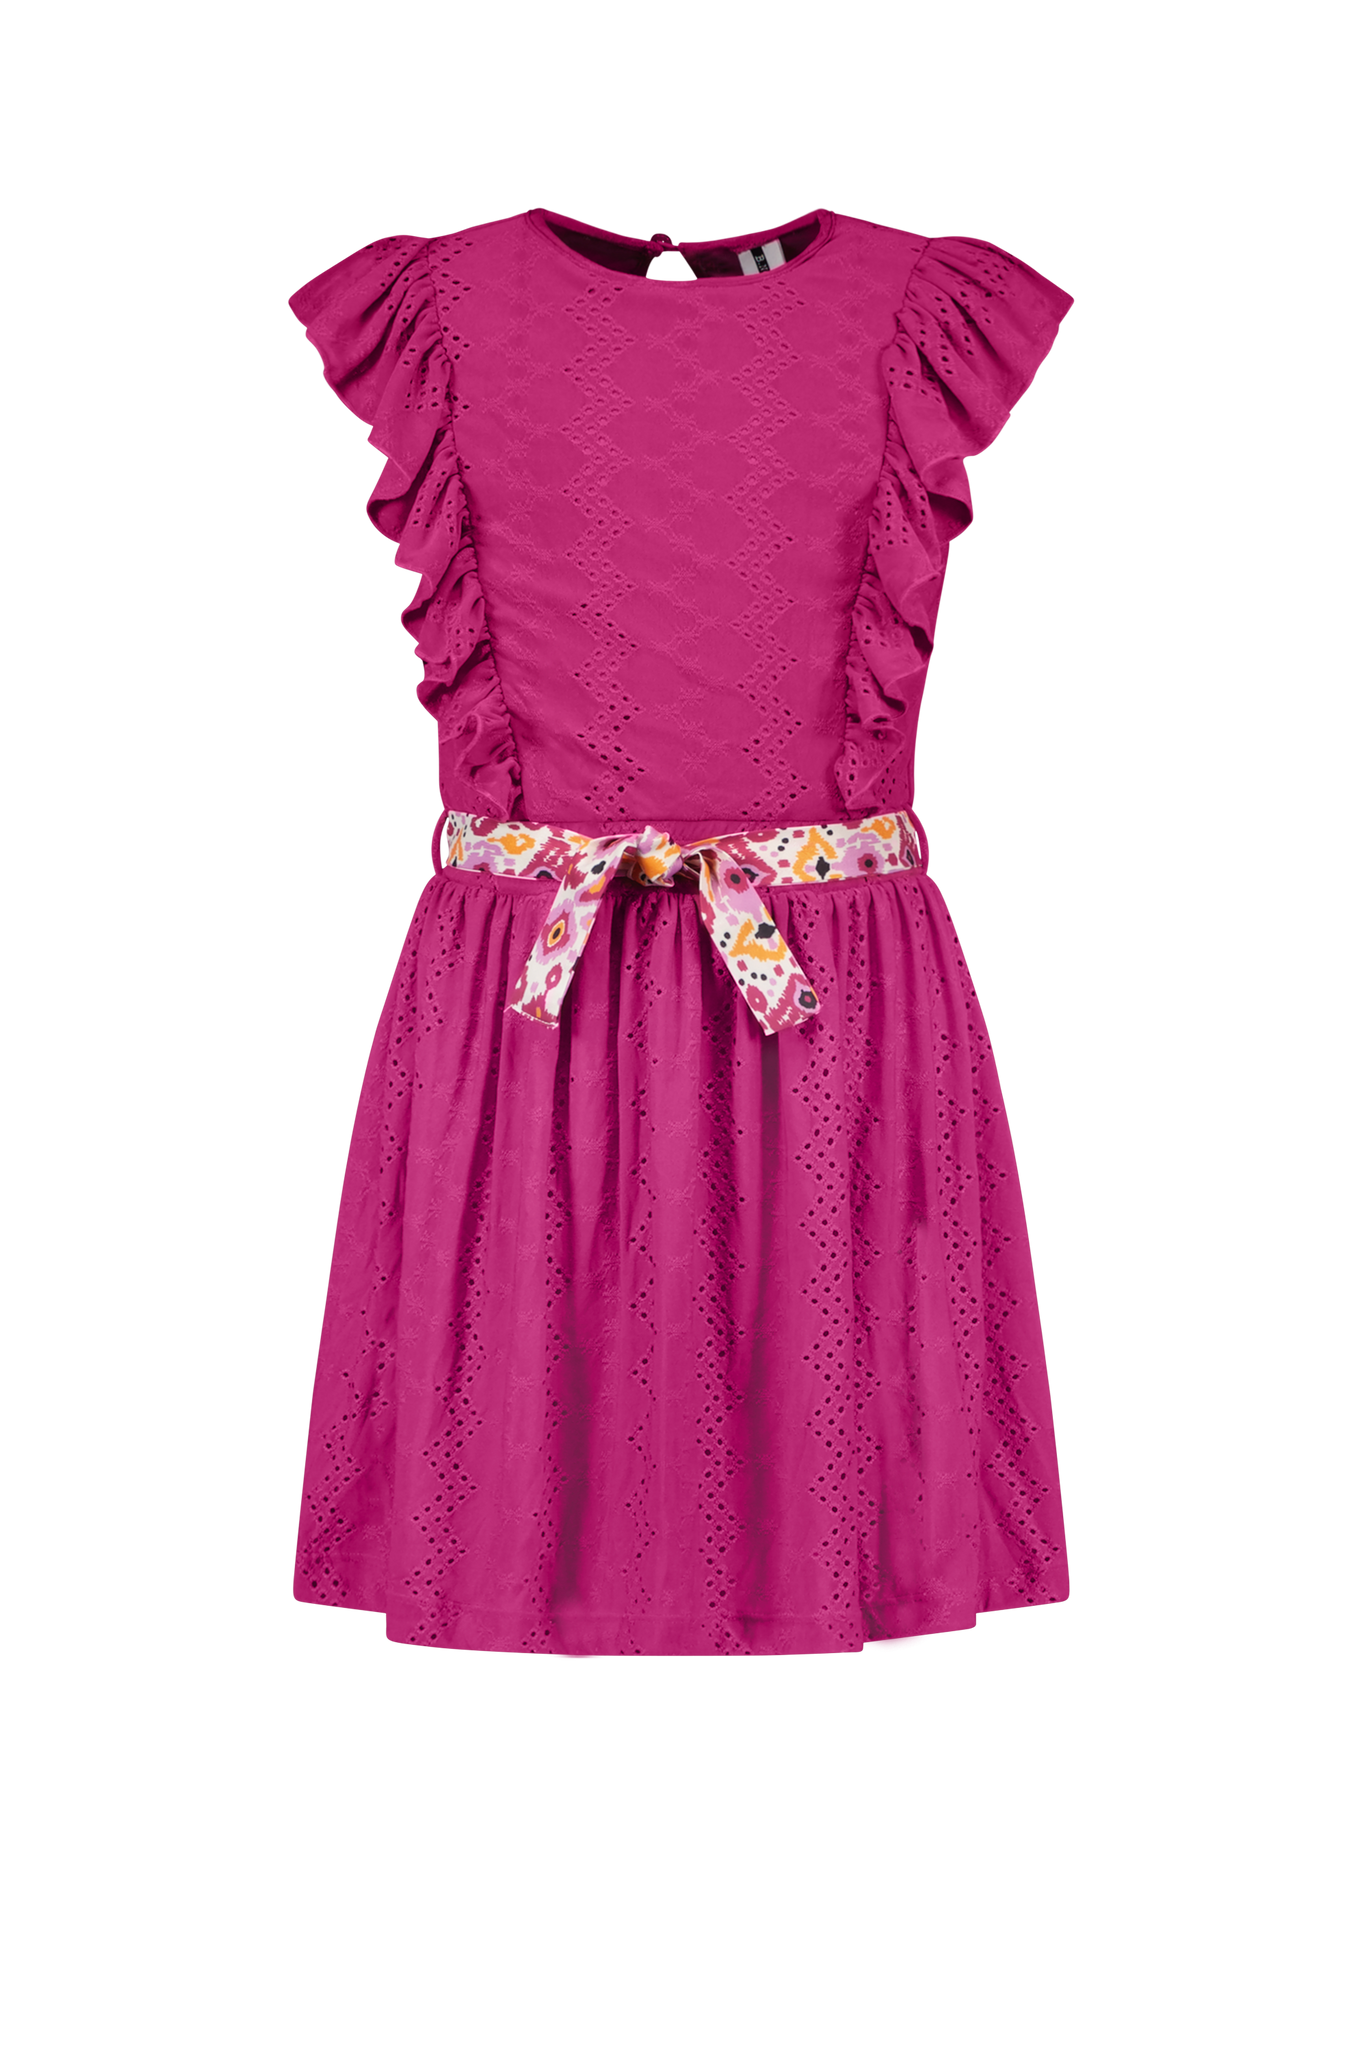 Girls jersey embroidery dress w/ ruffles + aop print